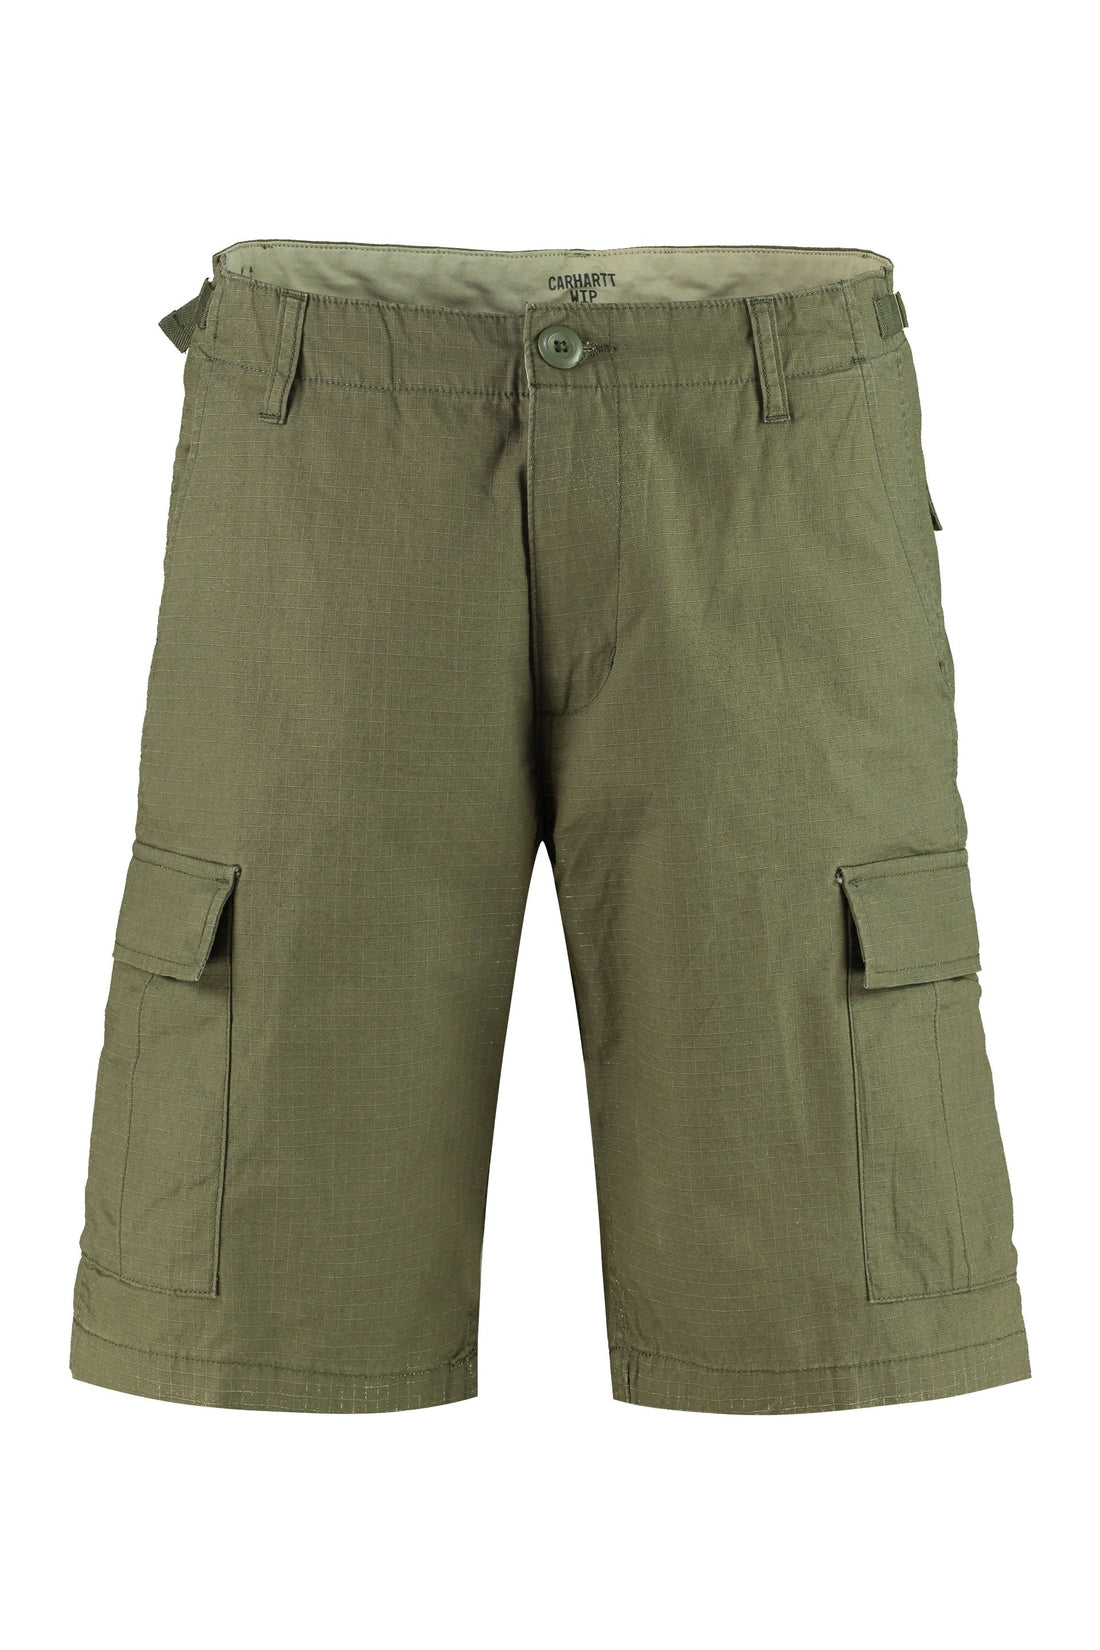 Carhartt-OUTLET-SALE-Aviation cotton cargo bermuda shorts-ARCHIVIST